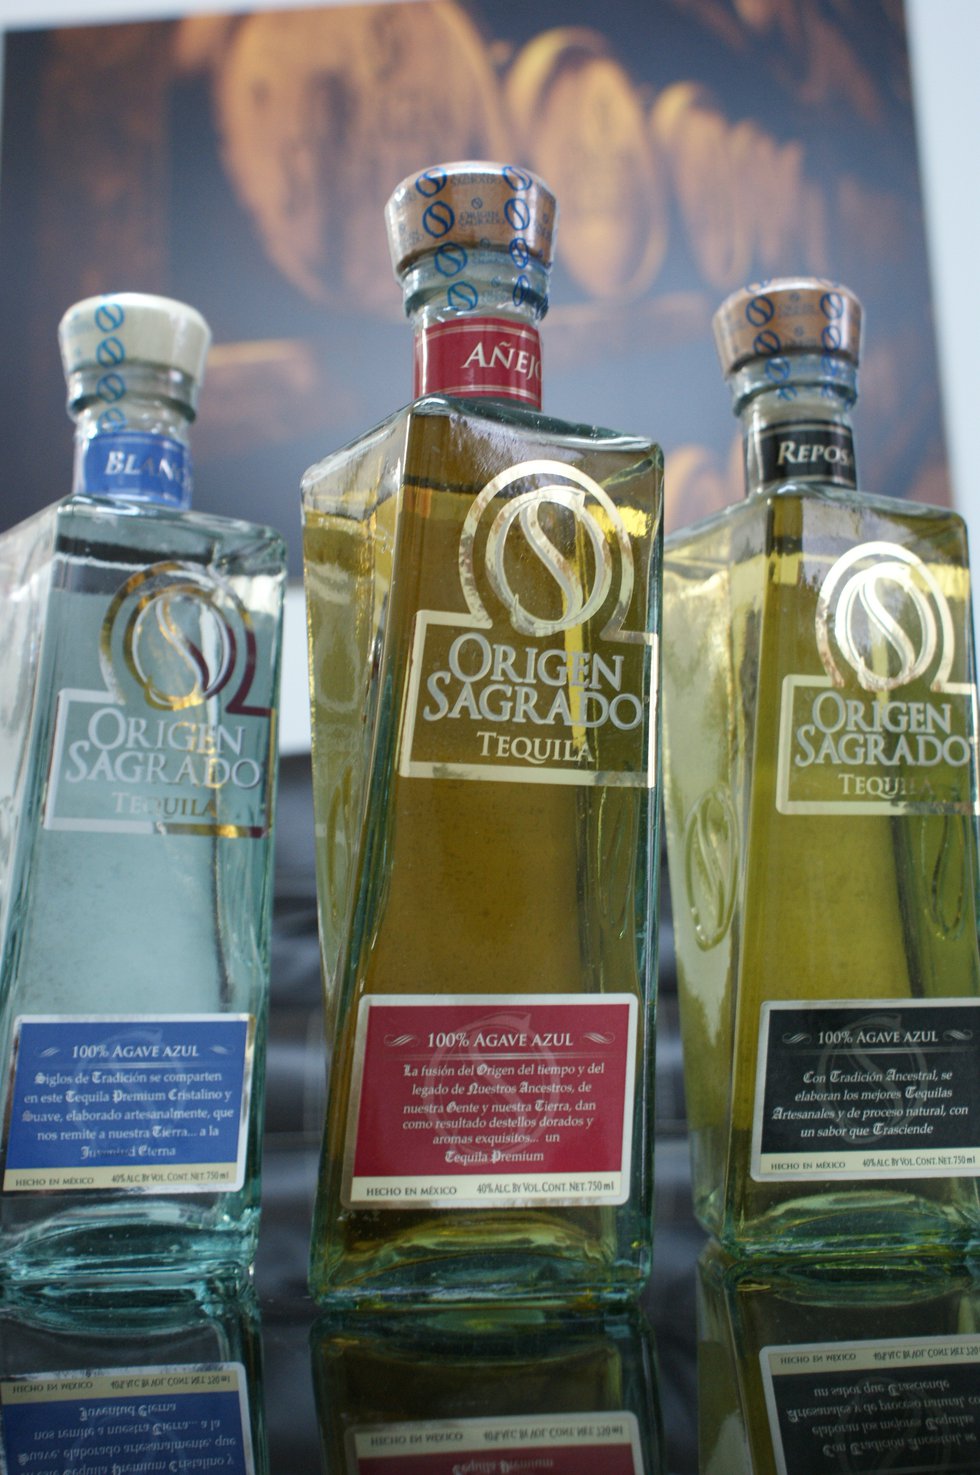 Origen Sagrado tequila